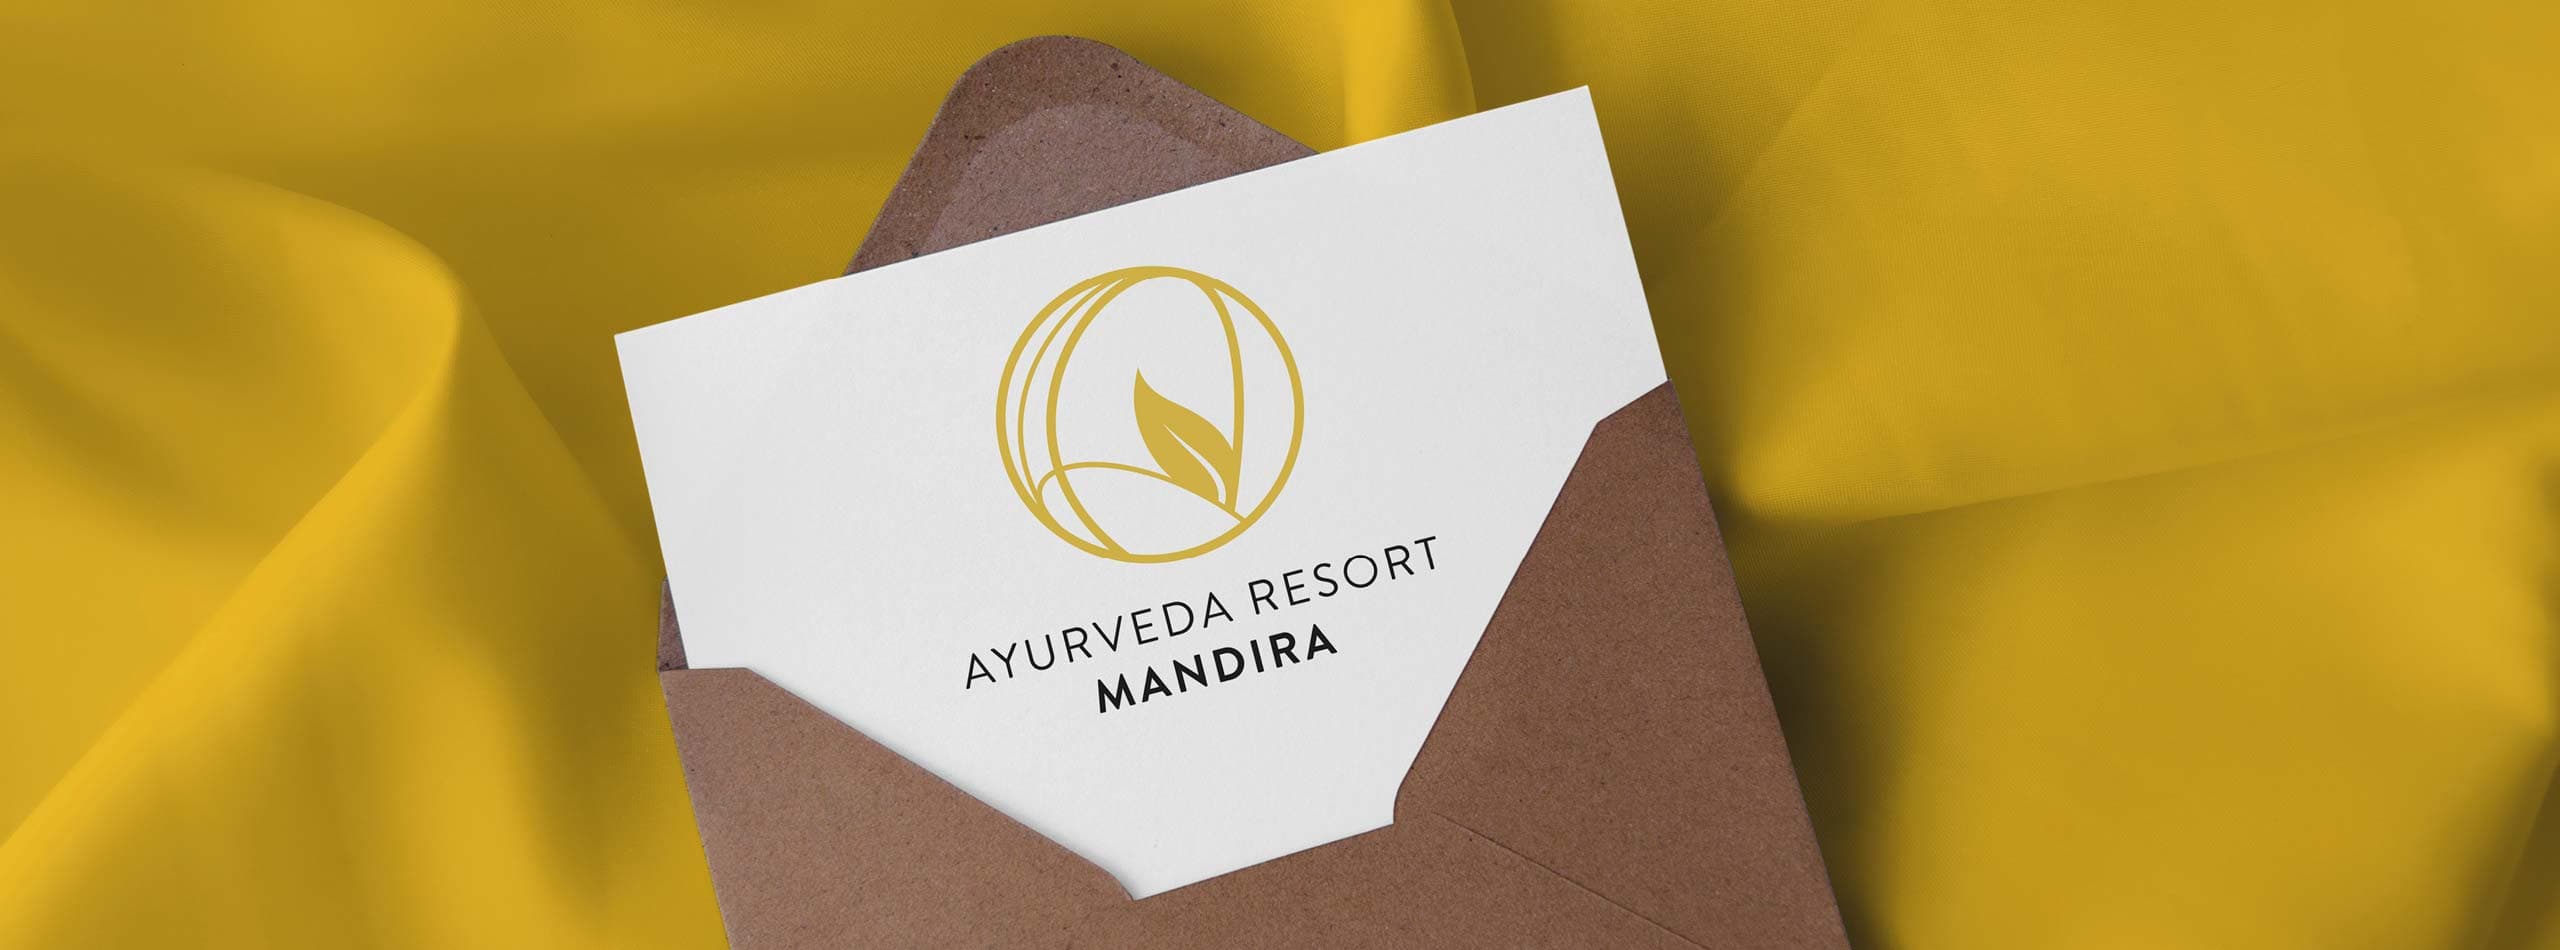 European Ayurveda Resort Newsletter Mandira Styria